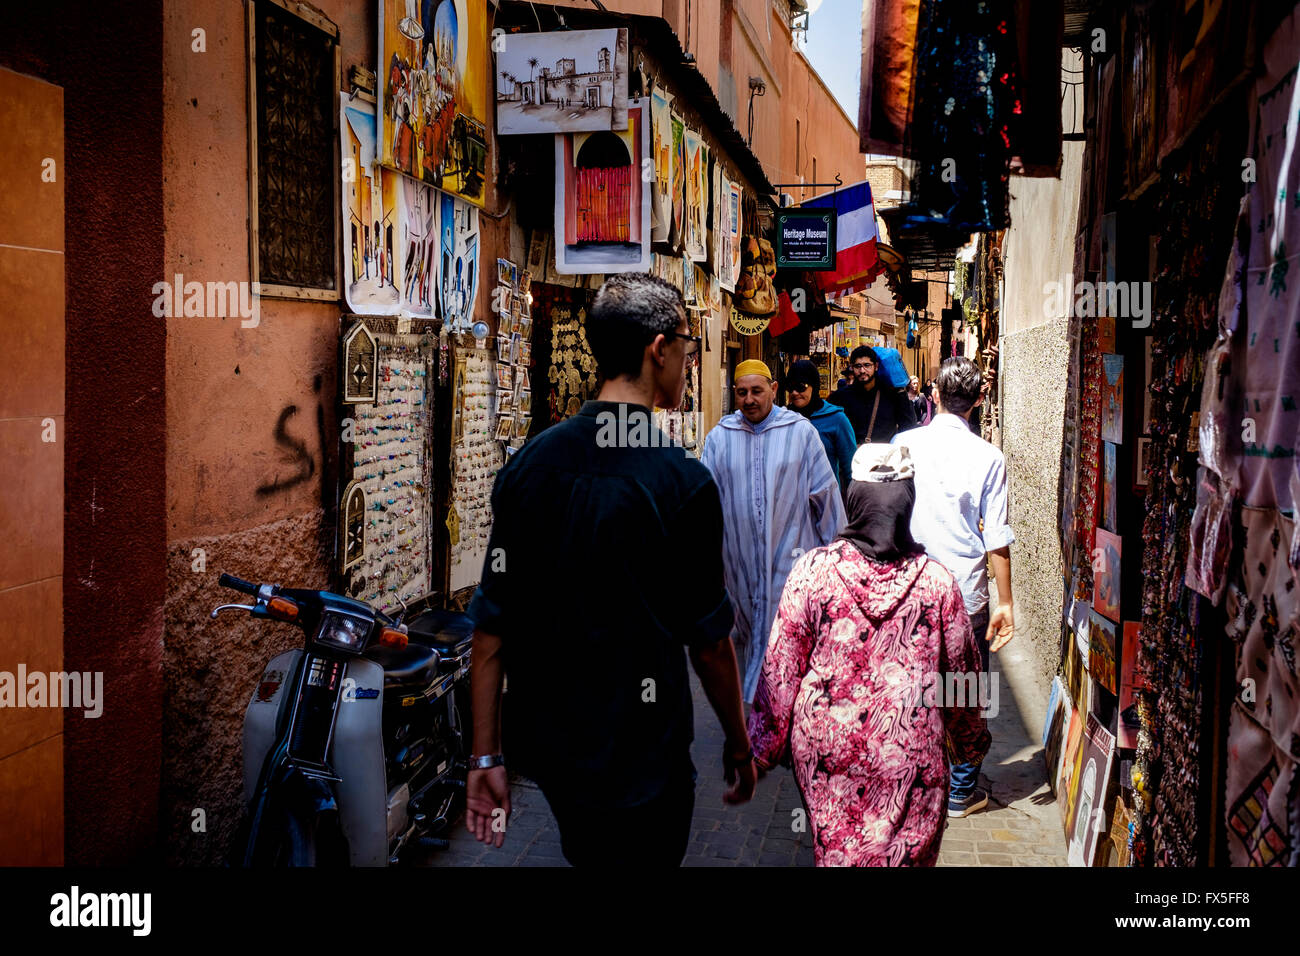 Street scene in a souk in the medina in Marrakech, Morocco, North Africa Stock Photo